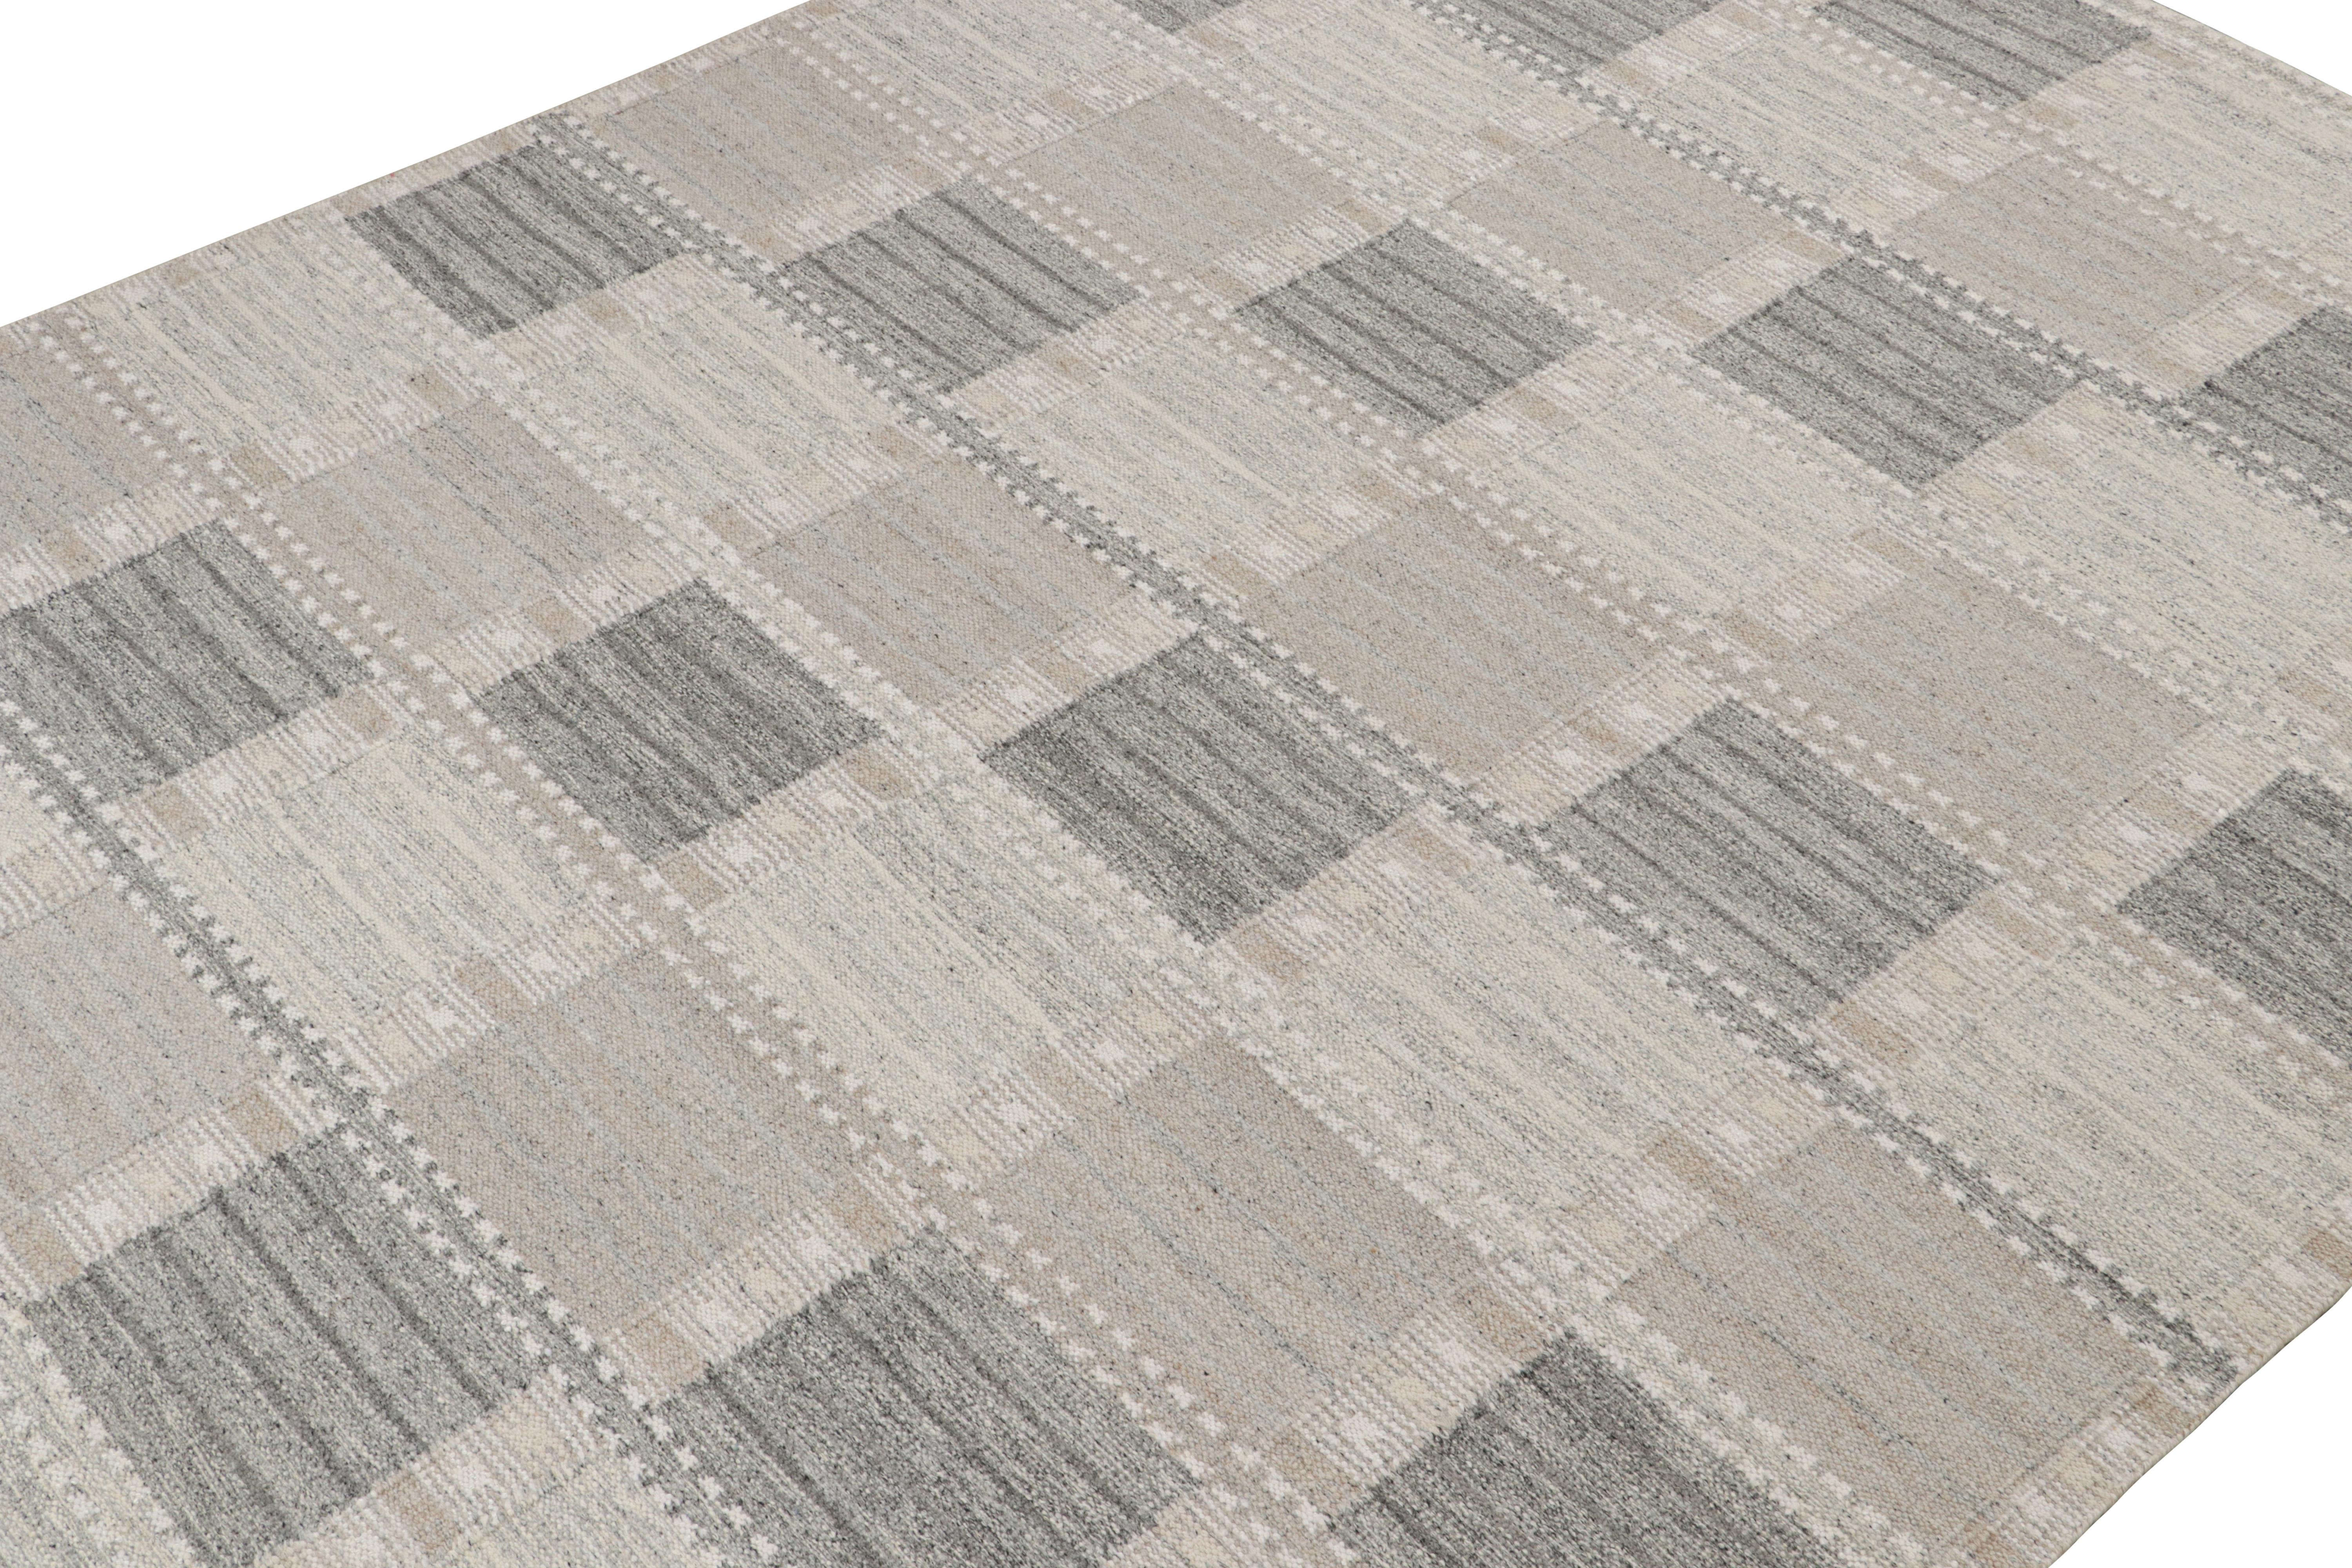 Indian Rug & Kilim’s Scandinavian Style Kilim Rug in Beige & Gray Geometric Patterns For Sale